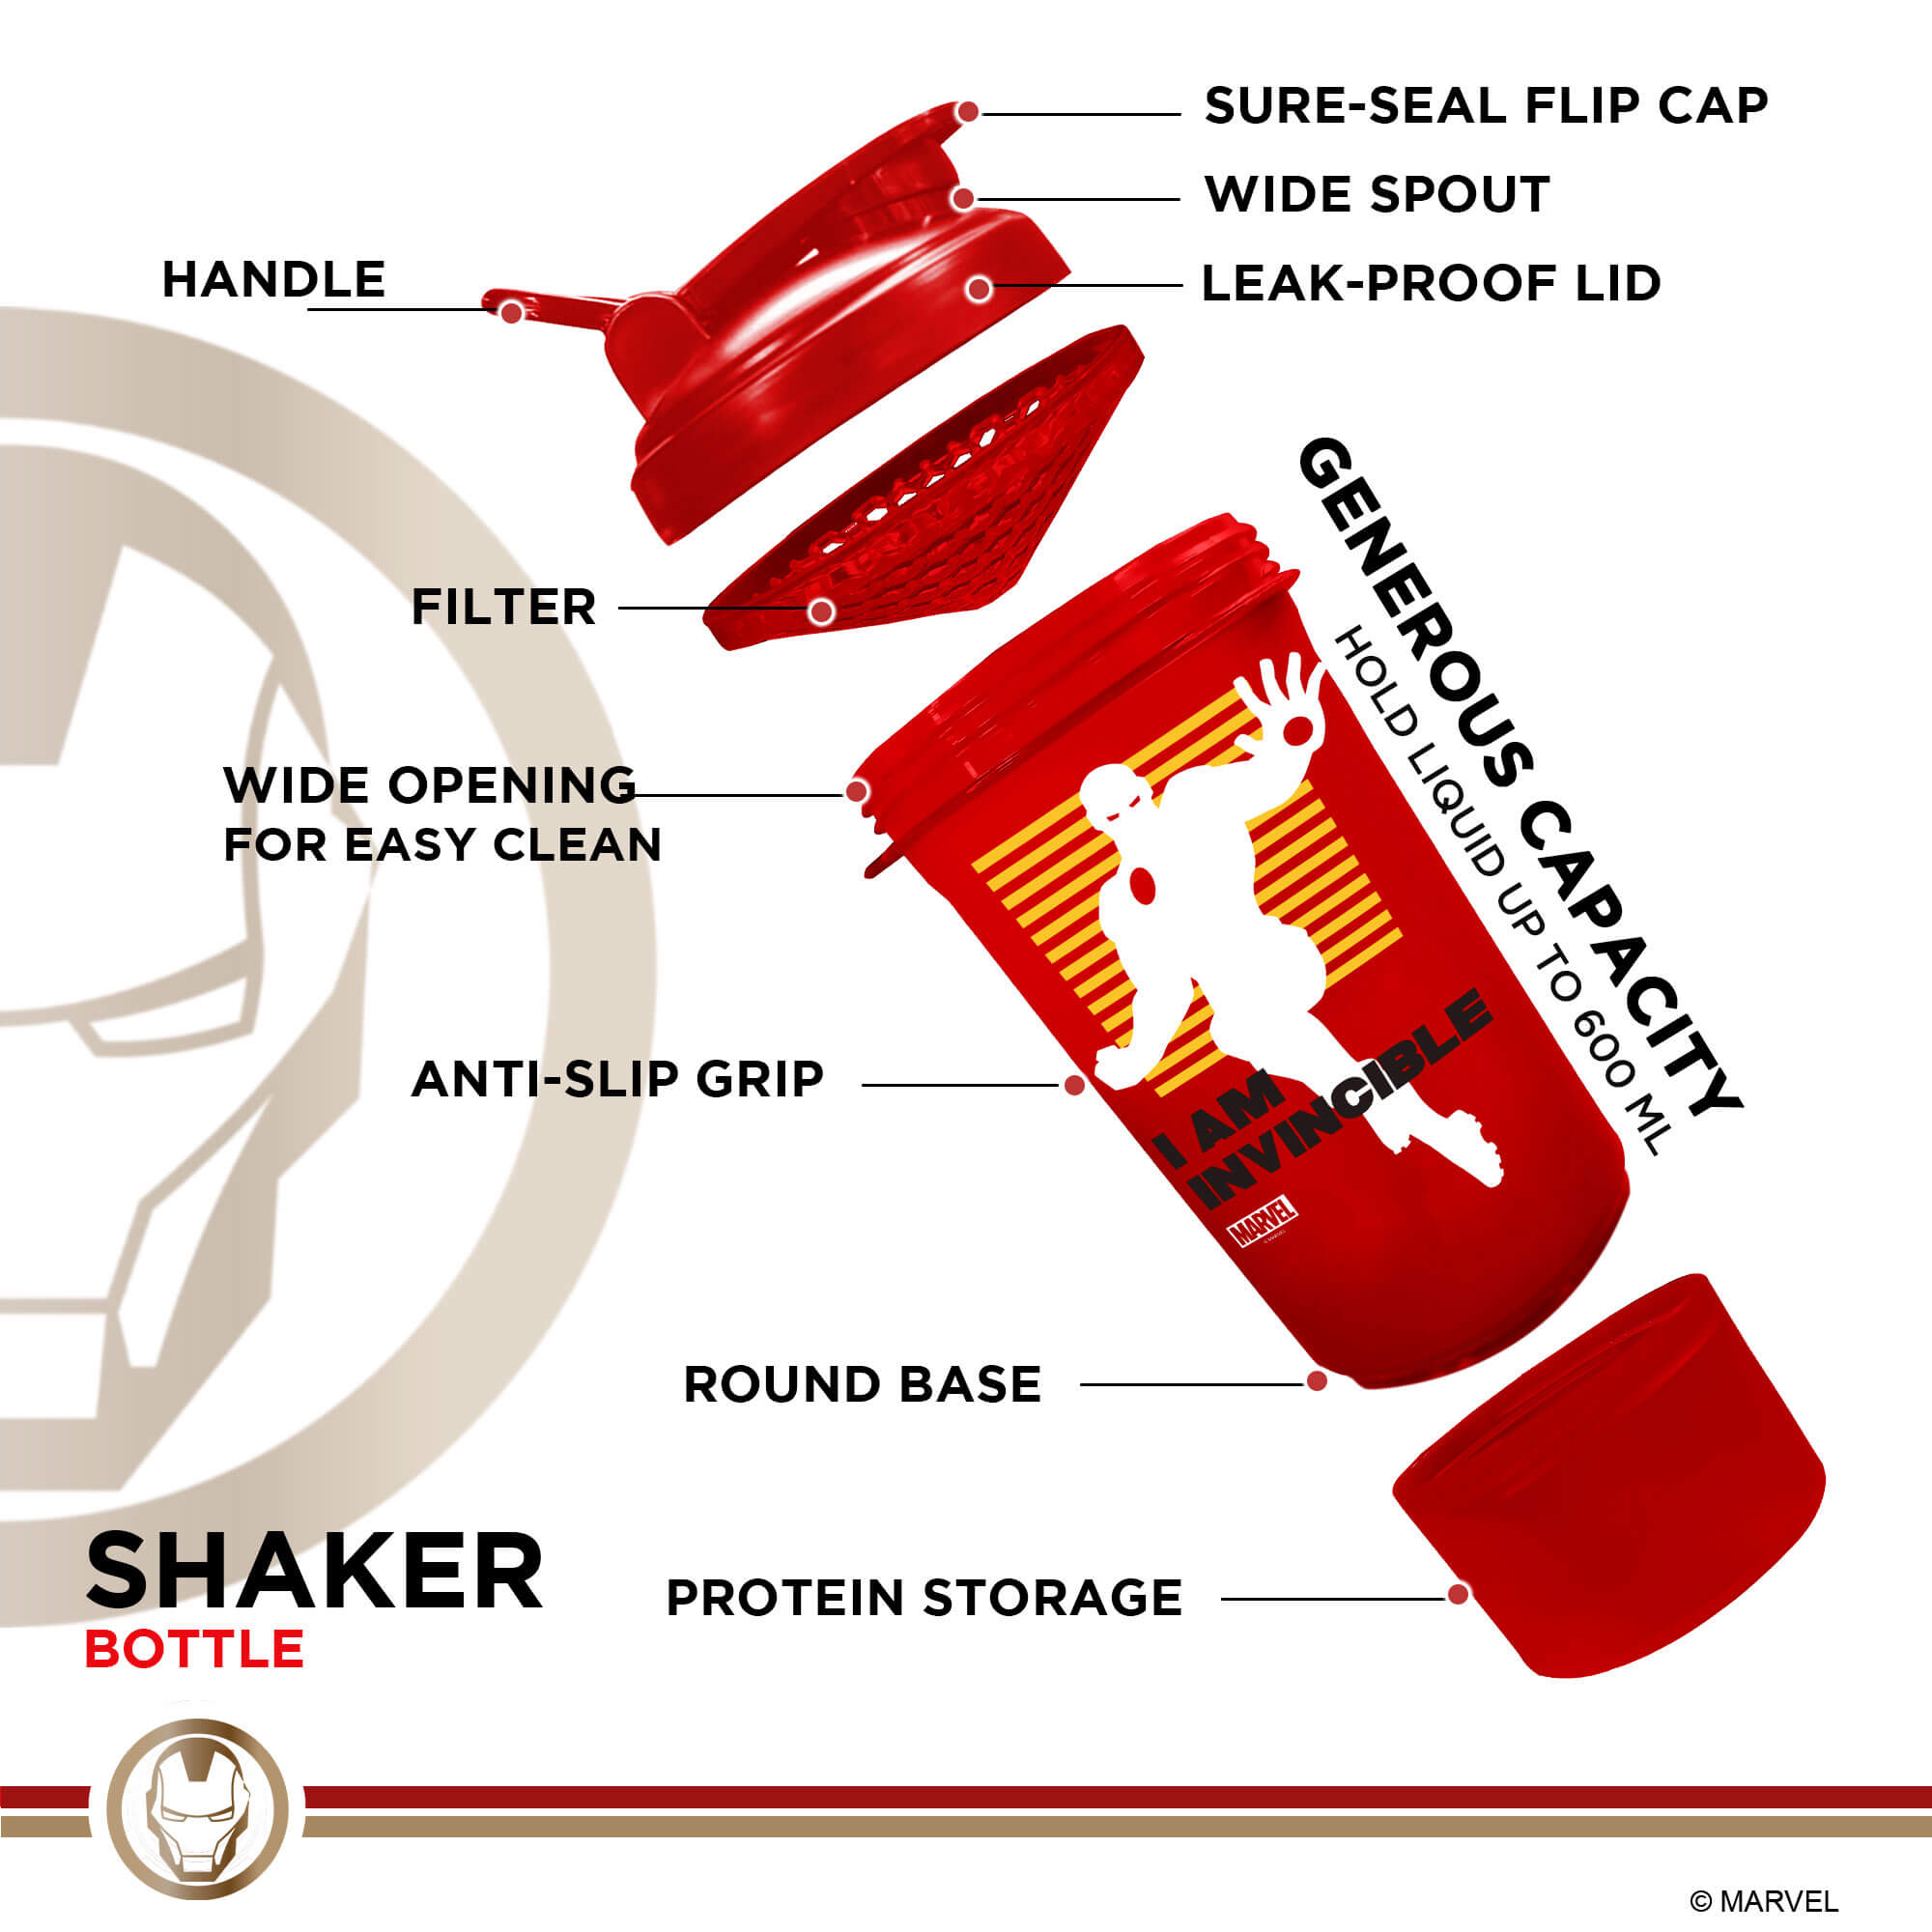 PowerMax x Marvel MSB-6S-IM-RED (600ml) IRONMAN Marvel Edition Protein Shaker Bottle with Single Storage